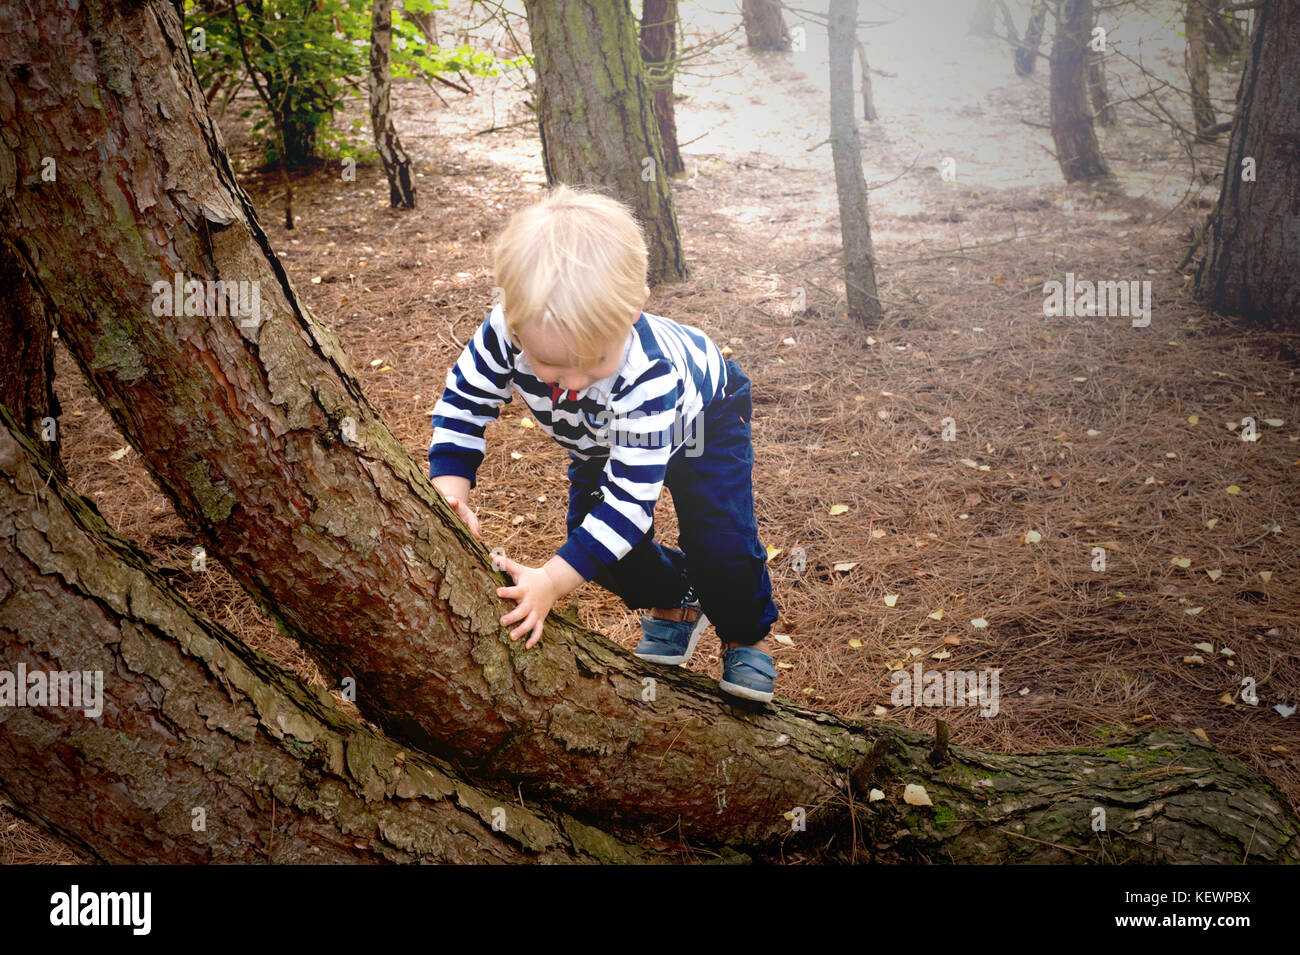 Little boy climbing up a tree trunk Stock Photo